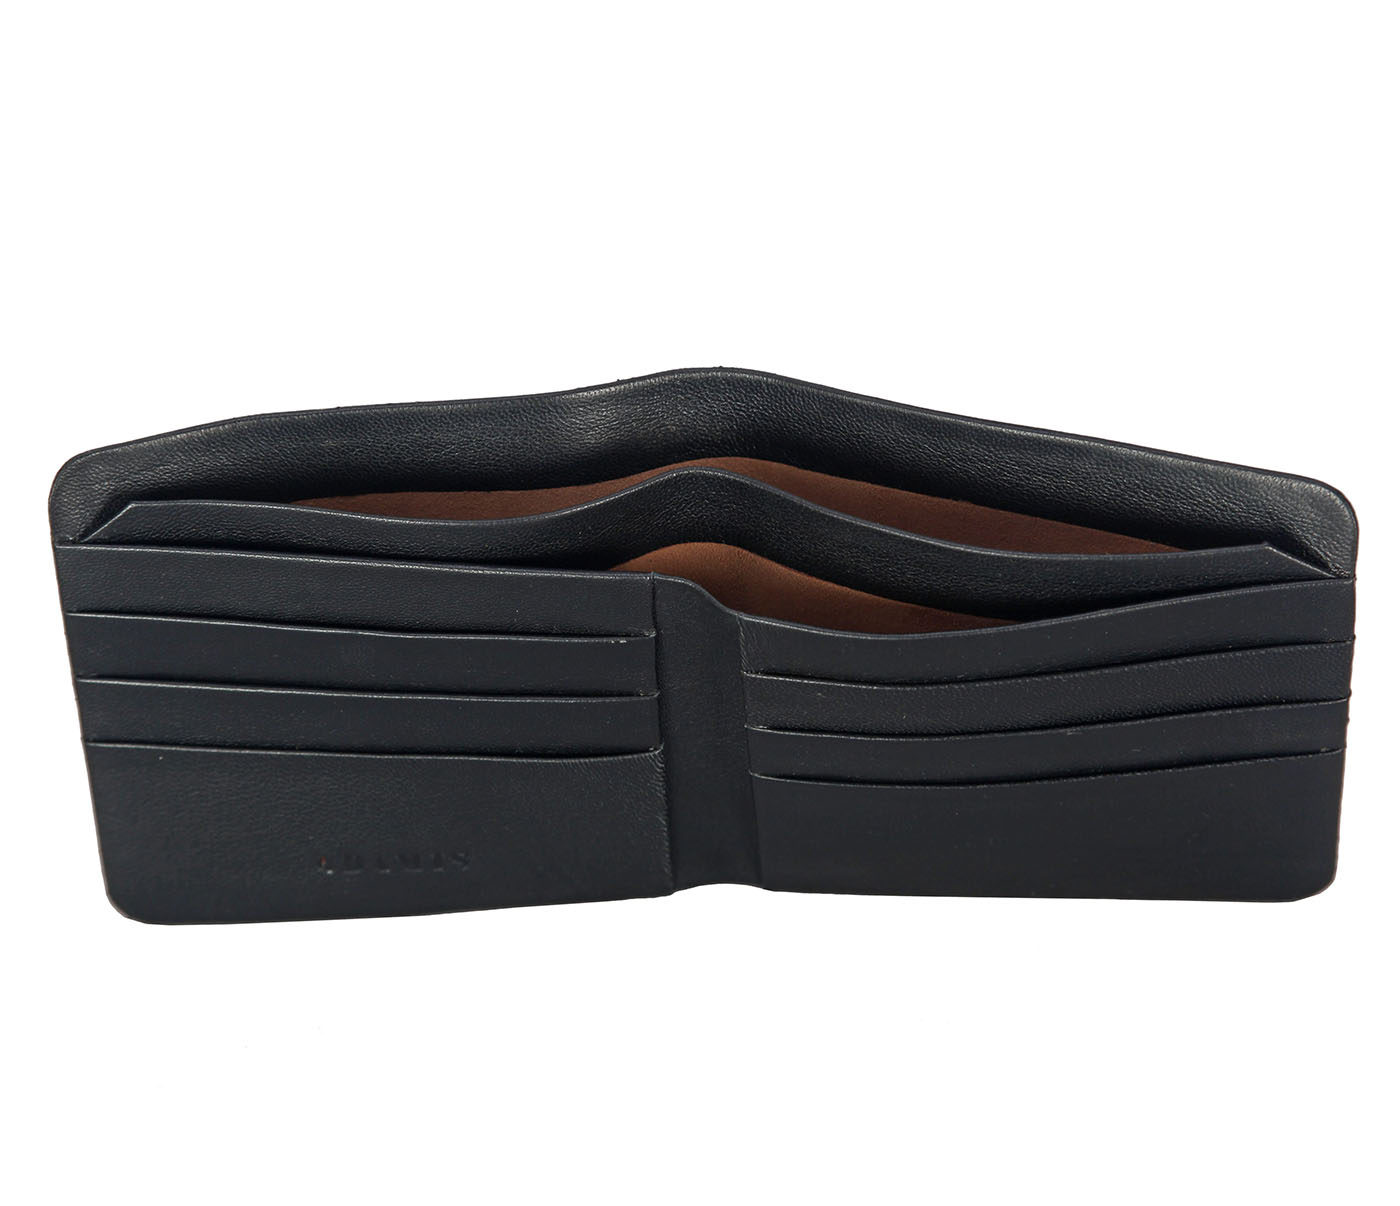 VW18-Diego-Men's bifold sleek wallet in Genuine Leather - Black